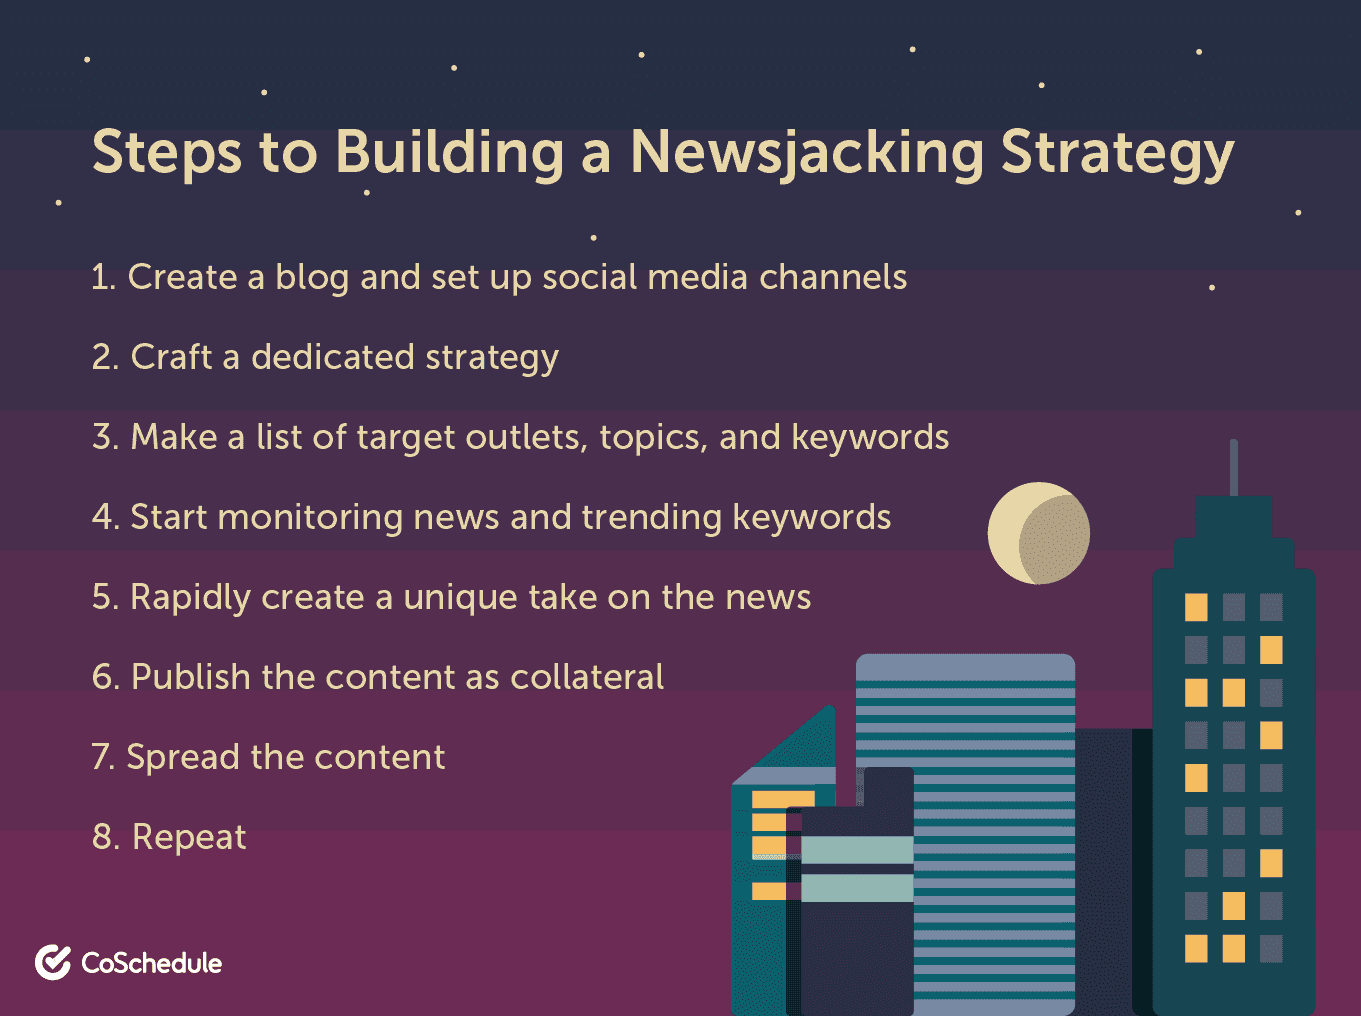 Steps to build a newsjacking strategy